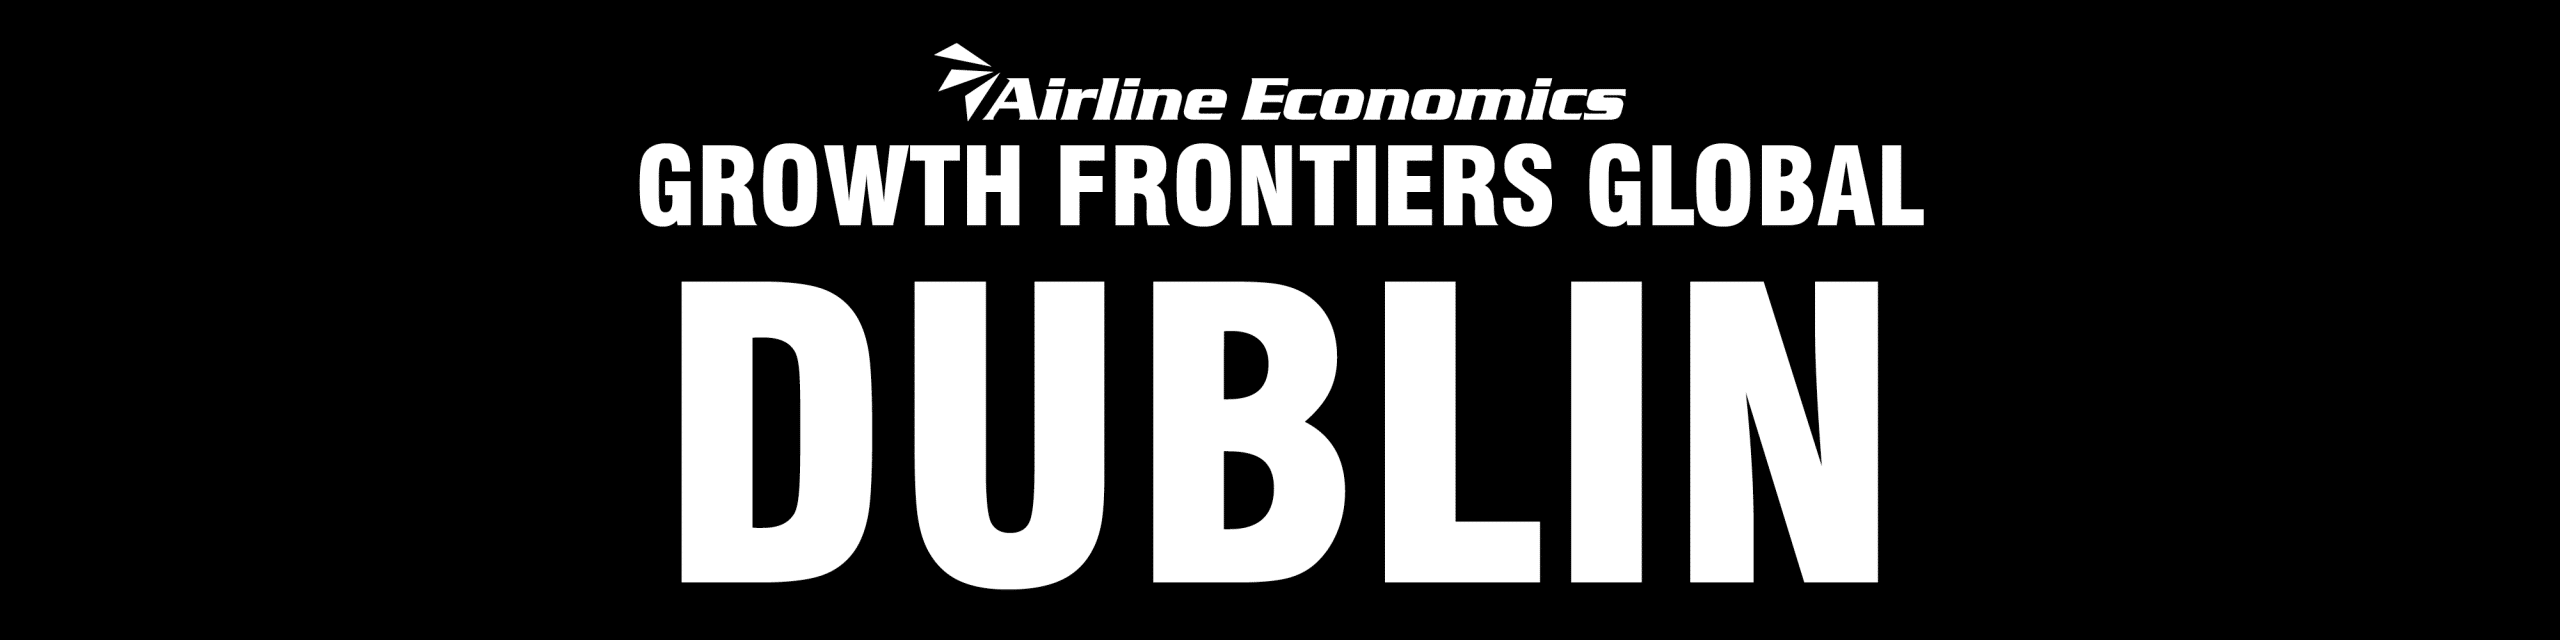 airline economics growth, aviation, dublin, glandore